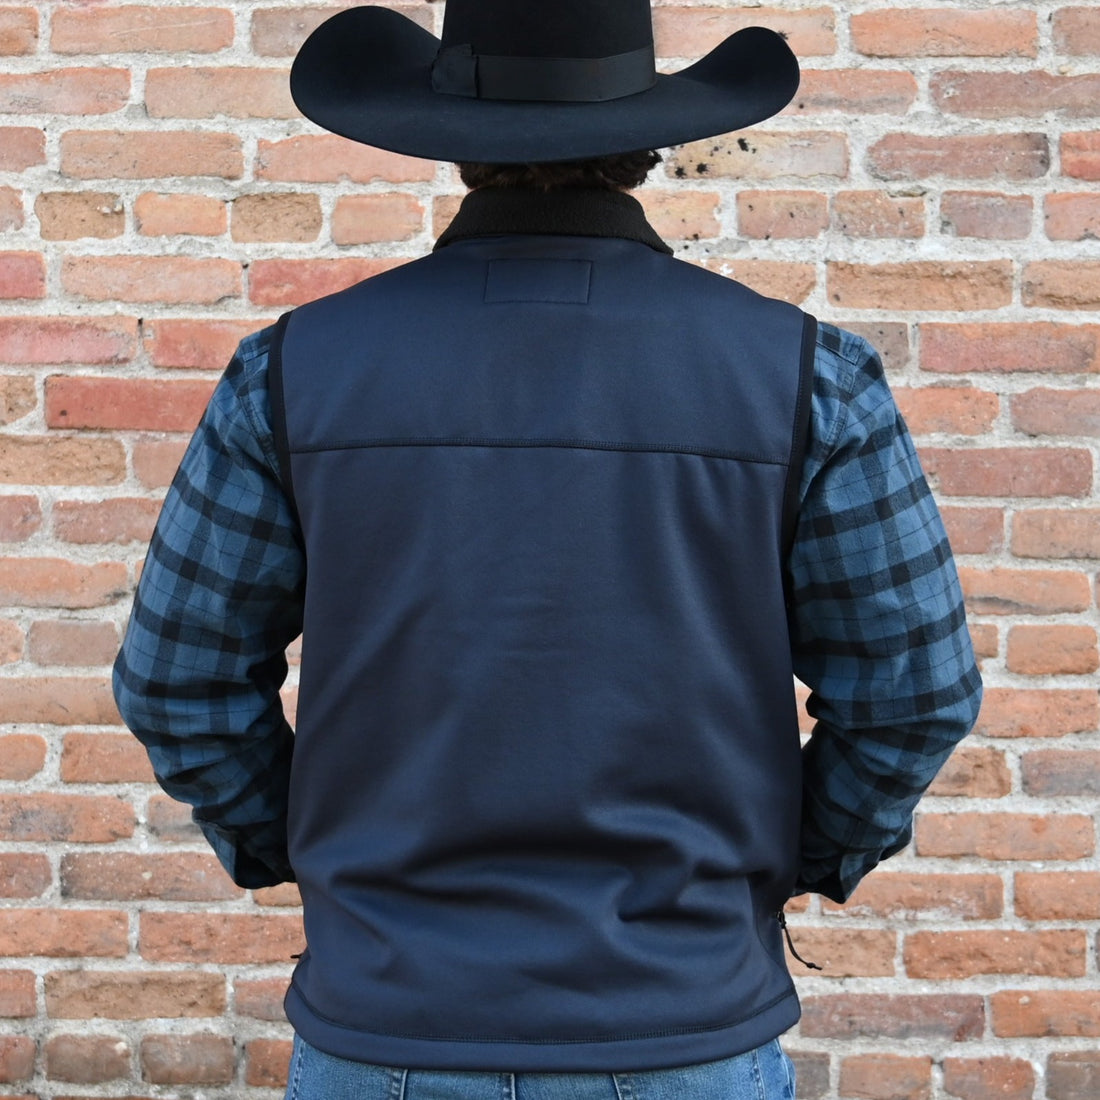 Filson Granite Spire Fleece Vest view of back of vest